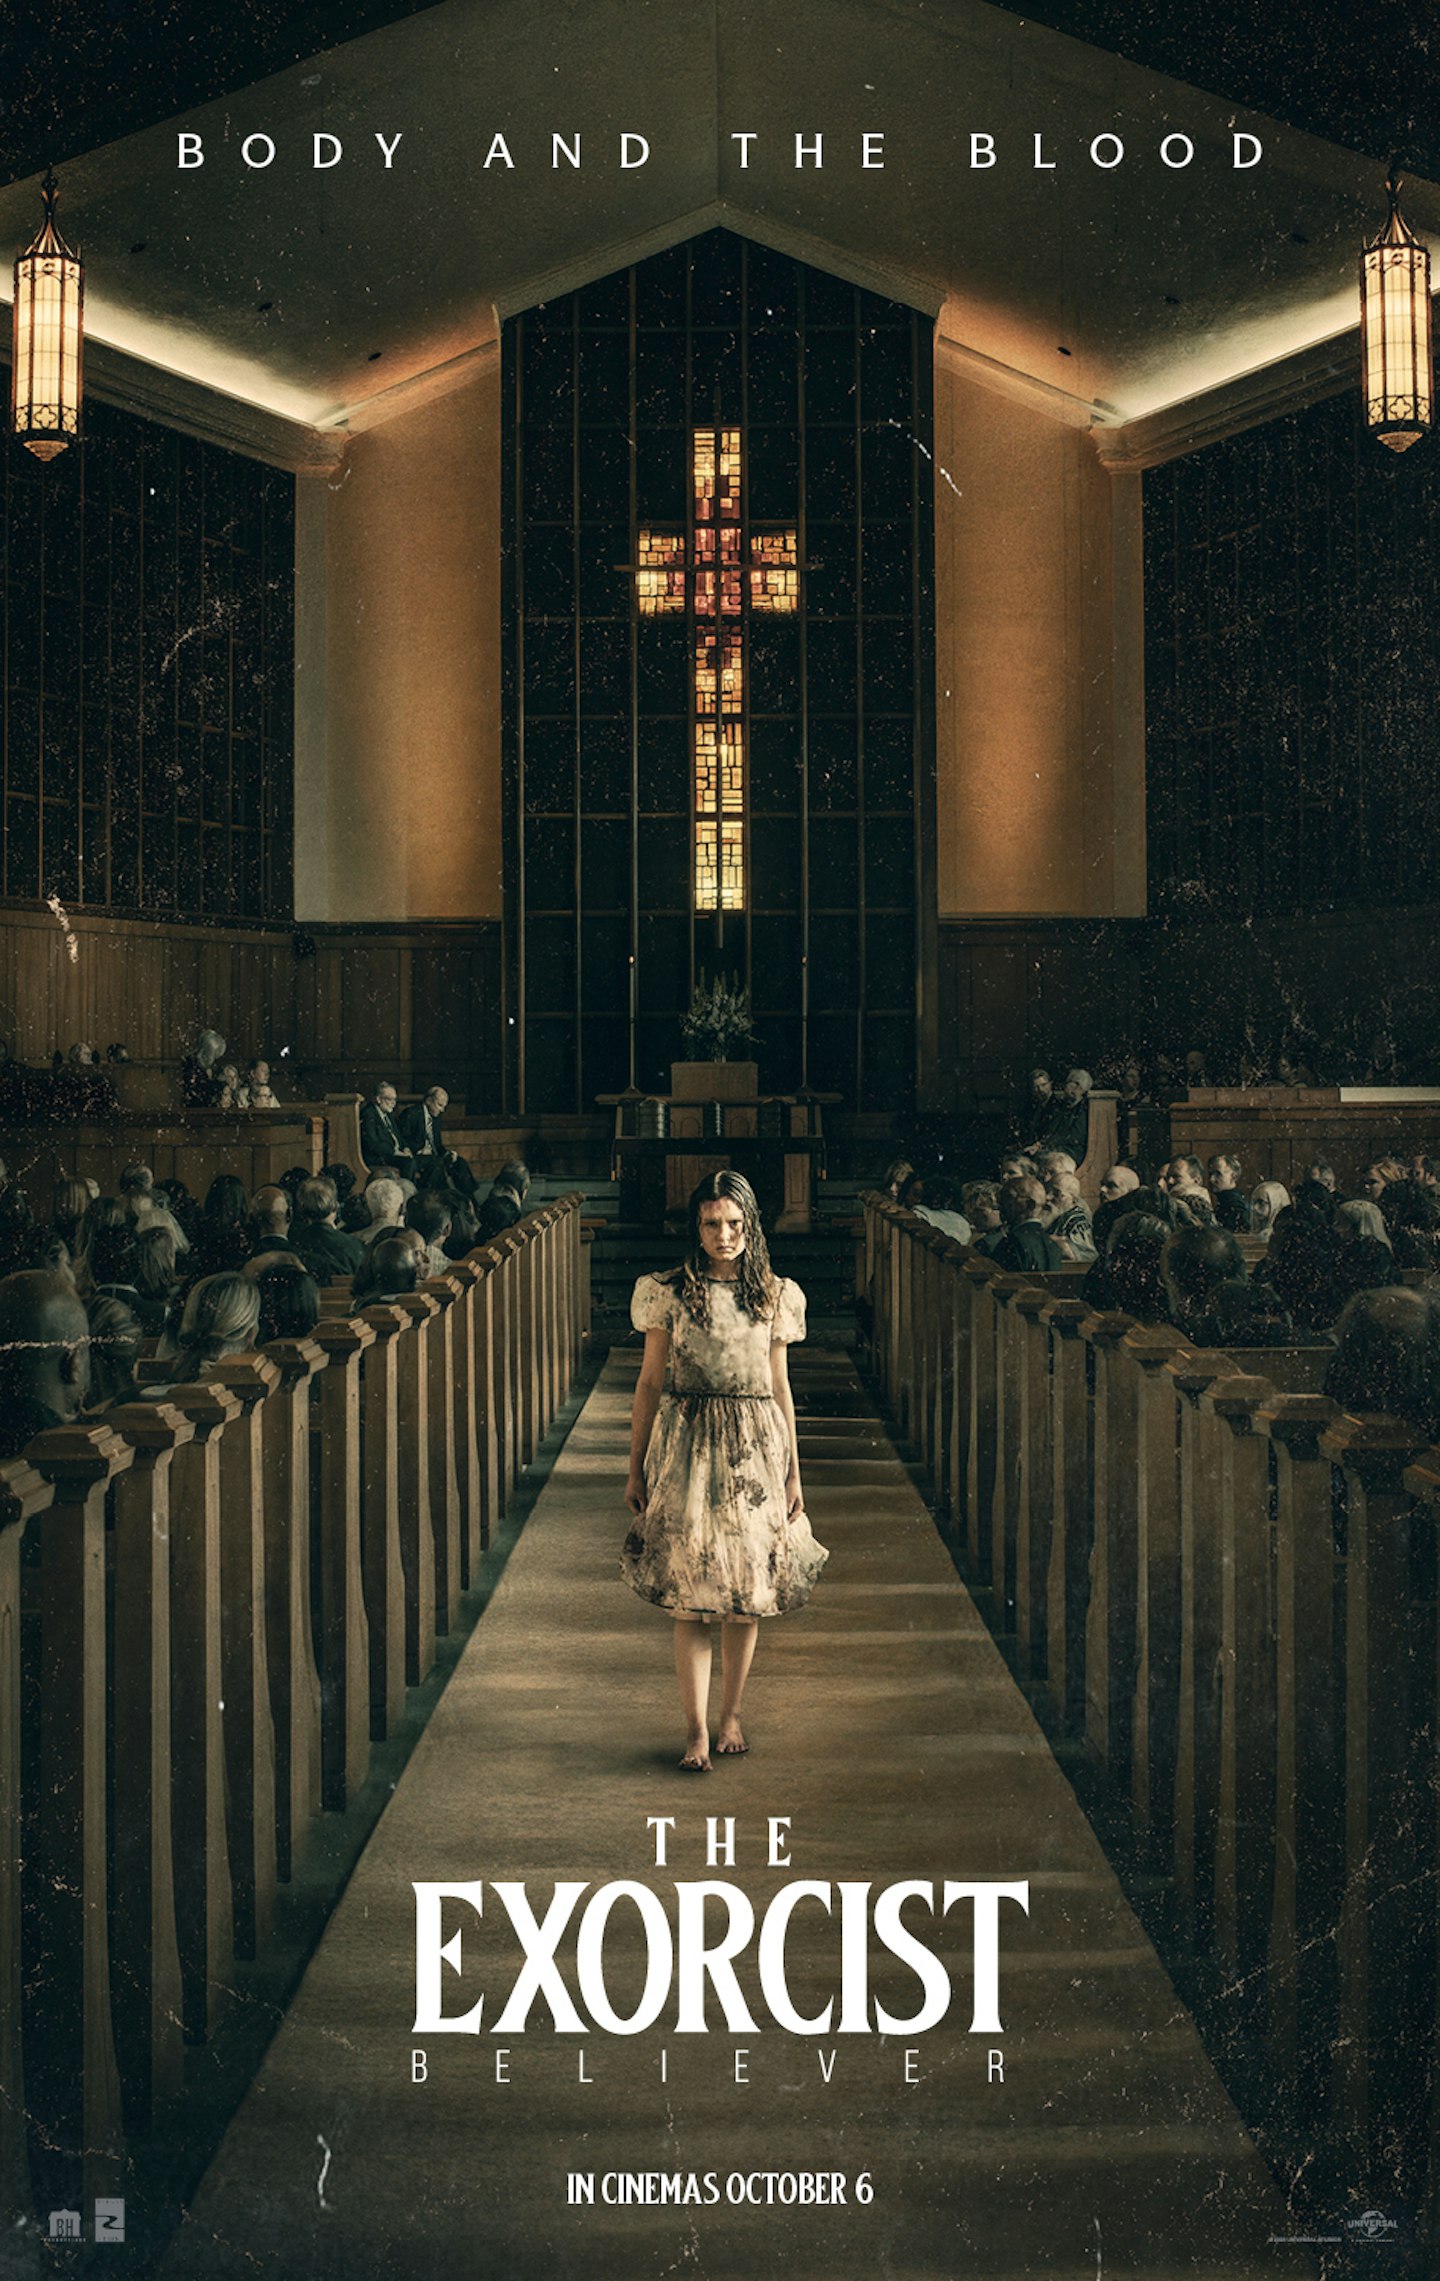 New Trailer For The Exorcist Believer Finds Ellen Burstyn's Chris